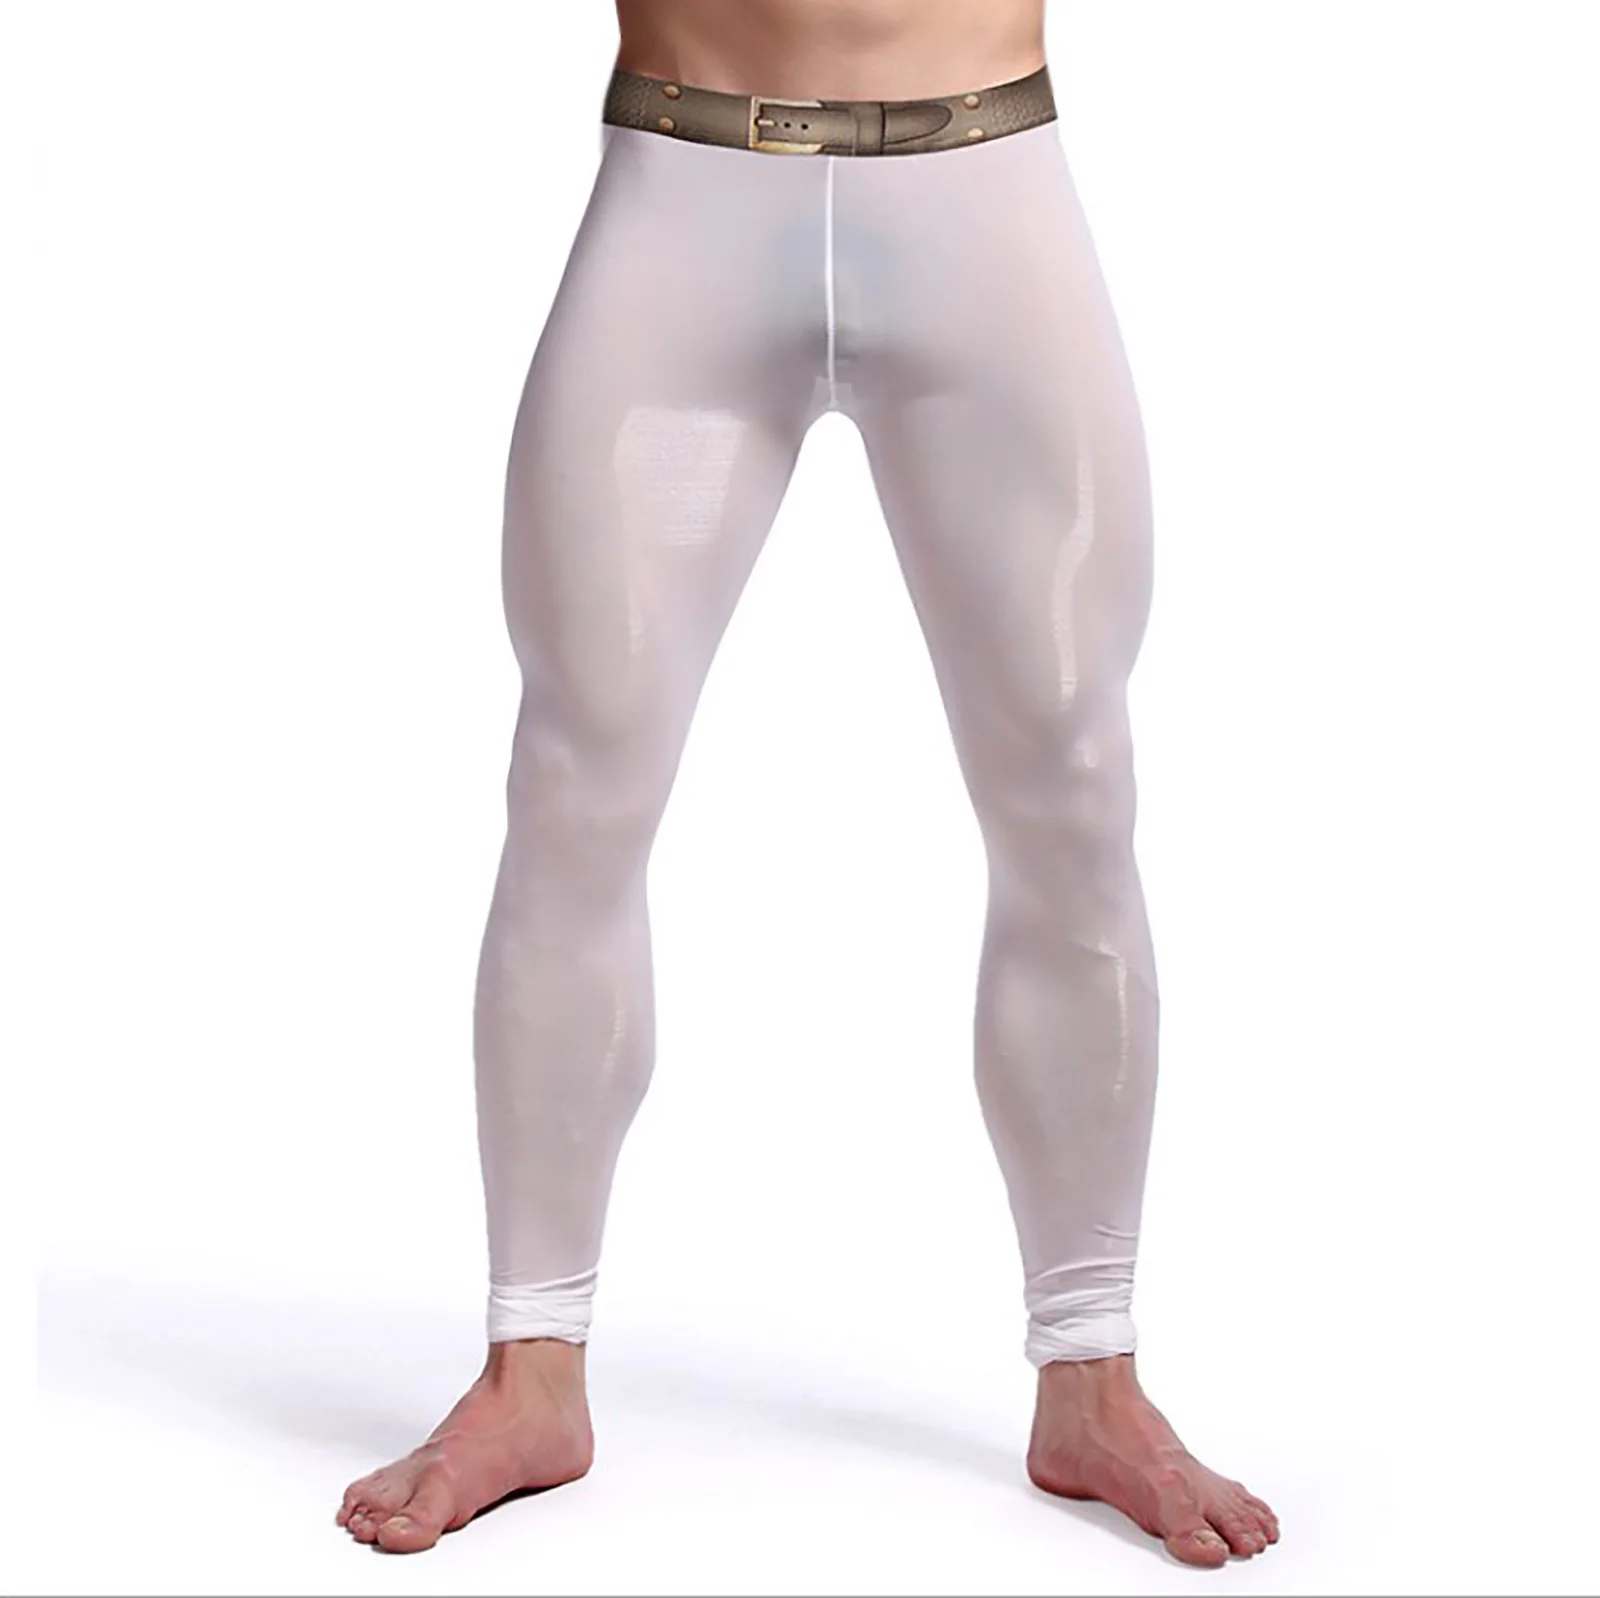 

Mens Home Stretchy Tight-fitting Pants Aerobic Elastic Waistband Leggings Sportwear Belt Print Jogging Cycling Pants Bottoms